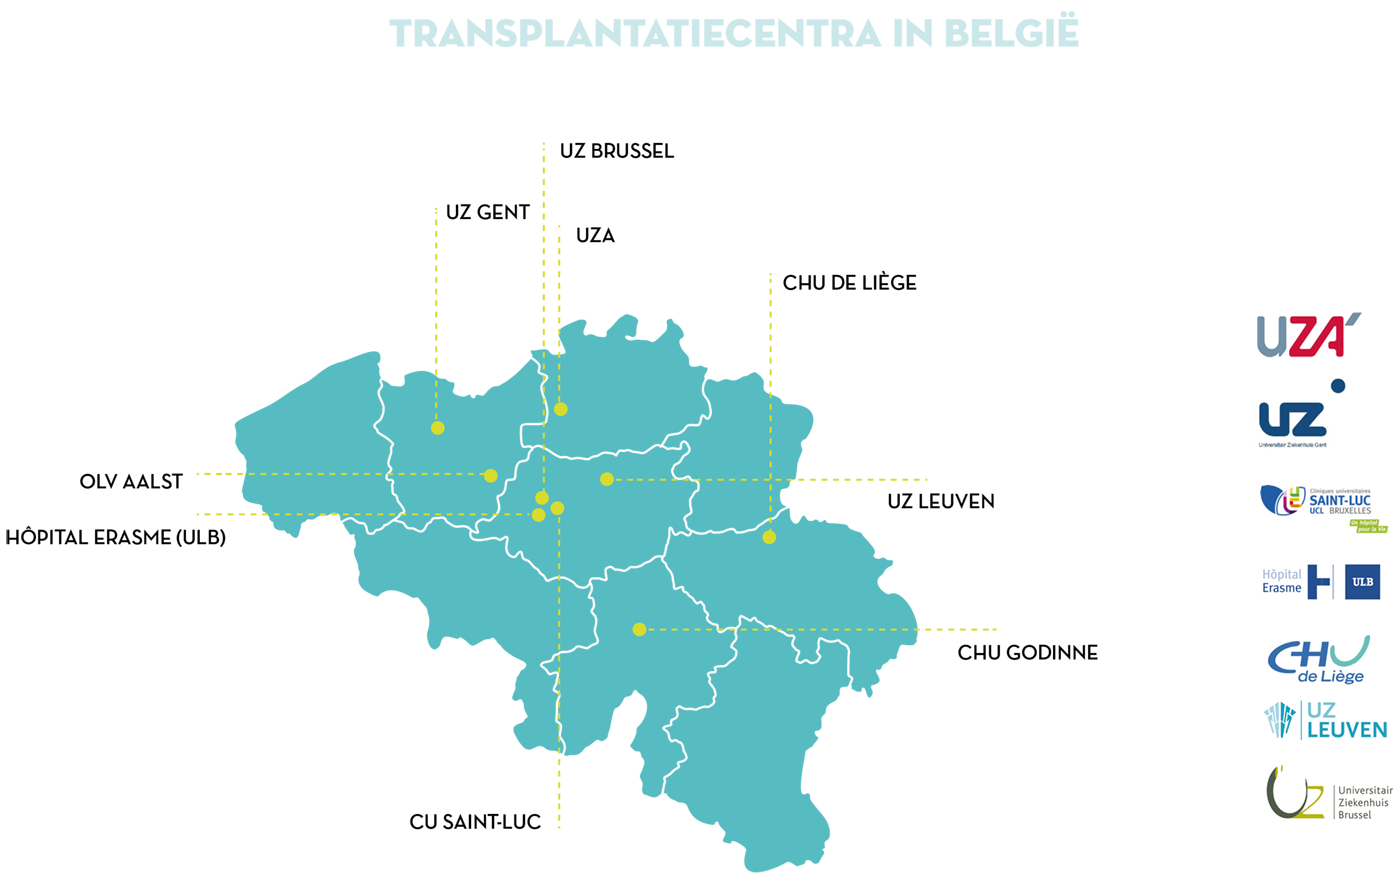 Transplantatiecentra in België